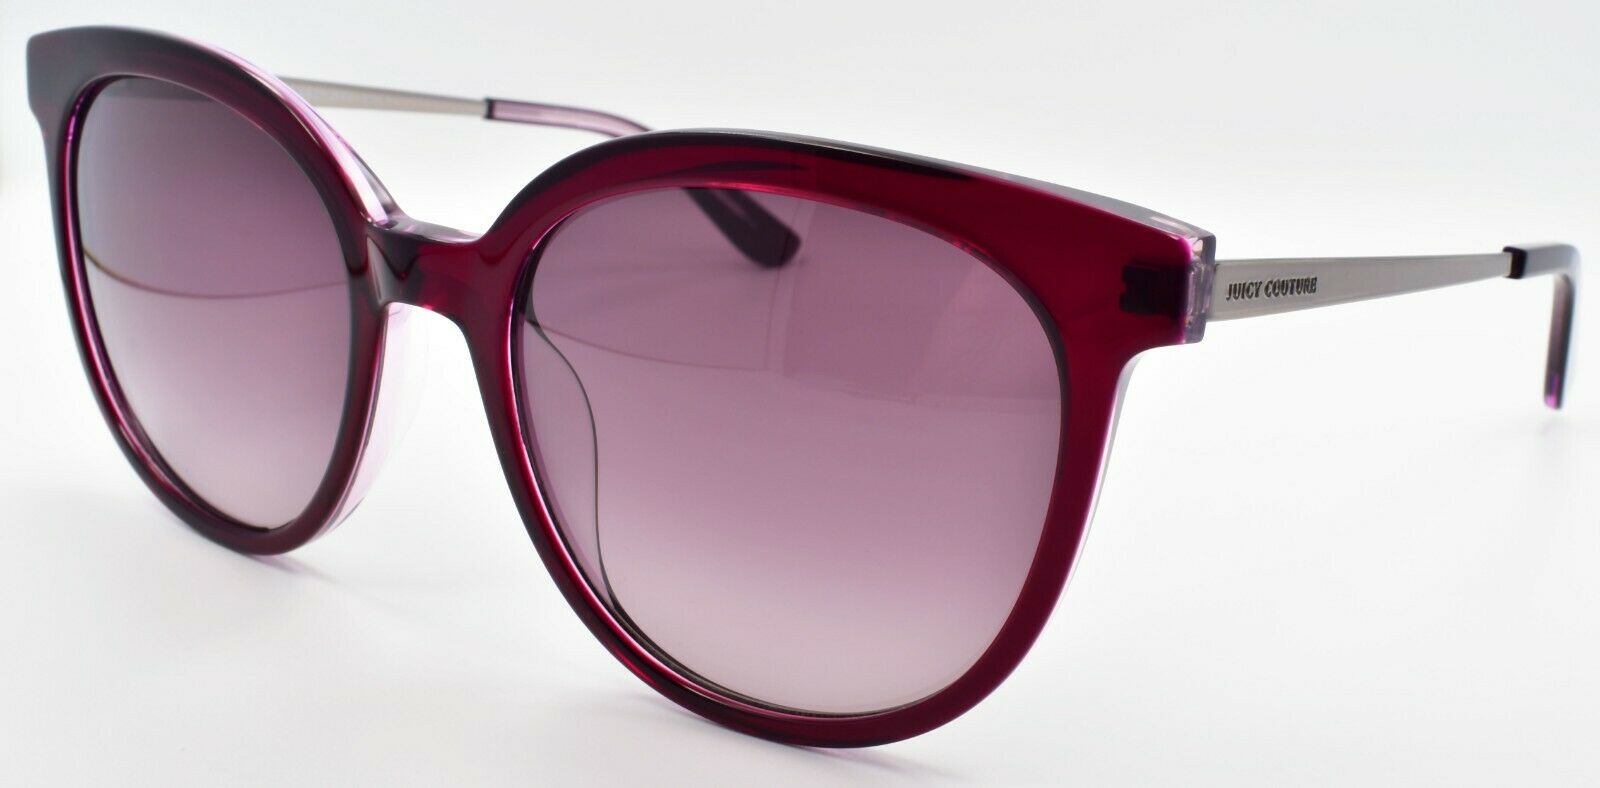 1-Juicy Couture JU610/G/S YZC3X Women's Sunglasses Purple / Burgundy Gradient-716736197012-IKSpecs